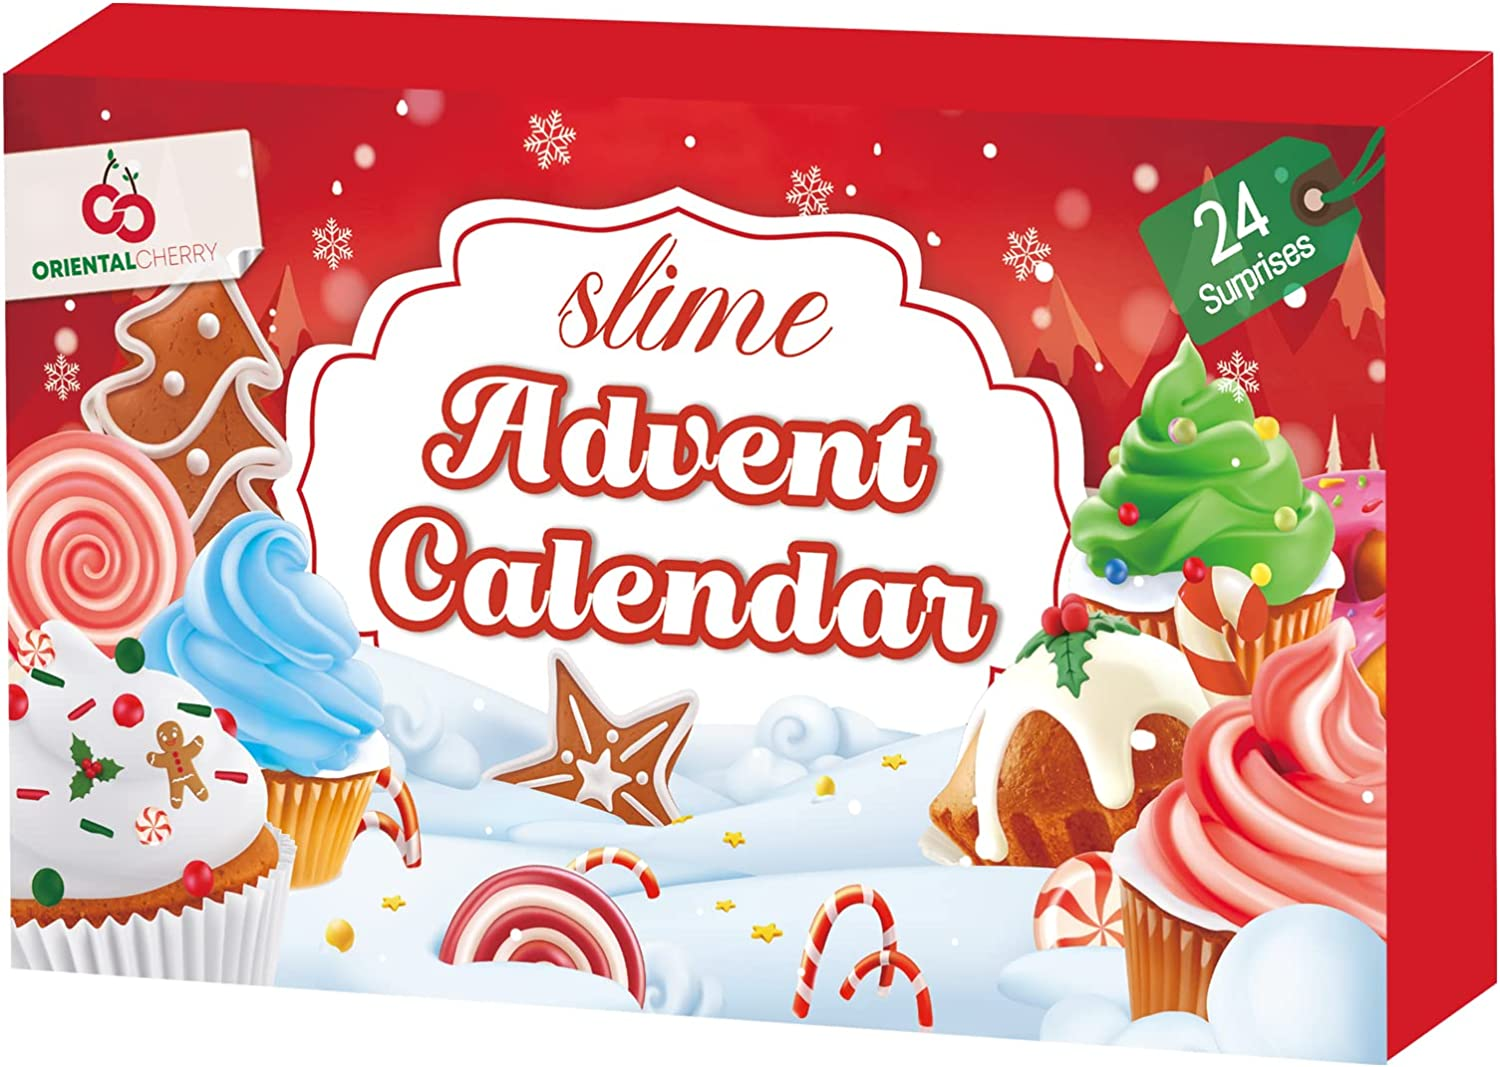 2022-oriental-cherry-slime-advent-calendar-24-days-of-slime-fun